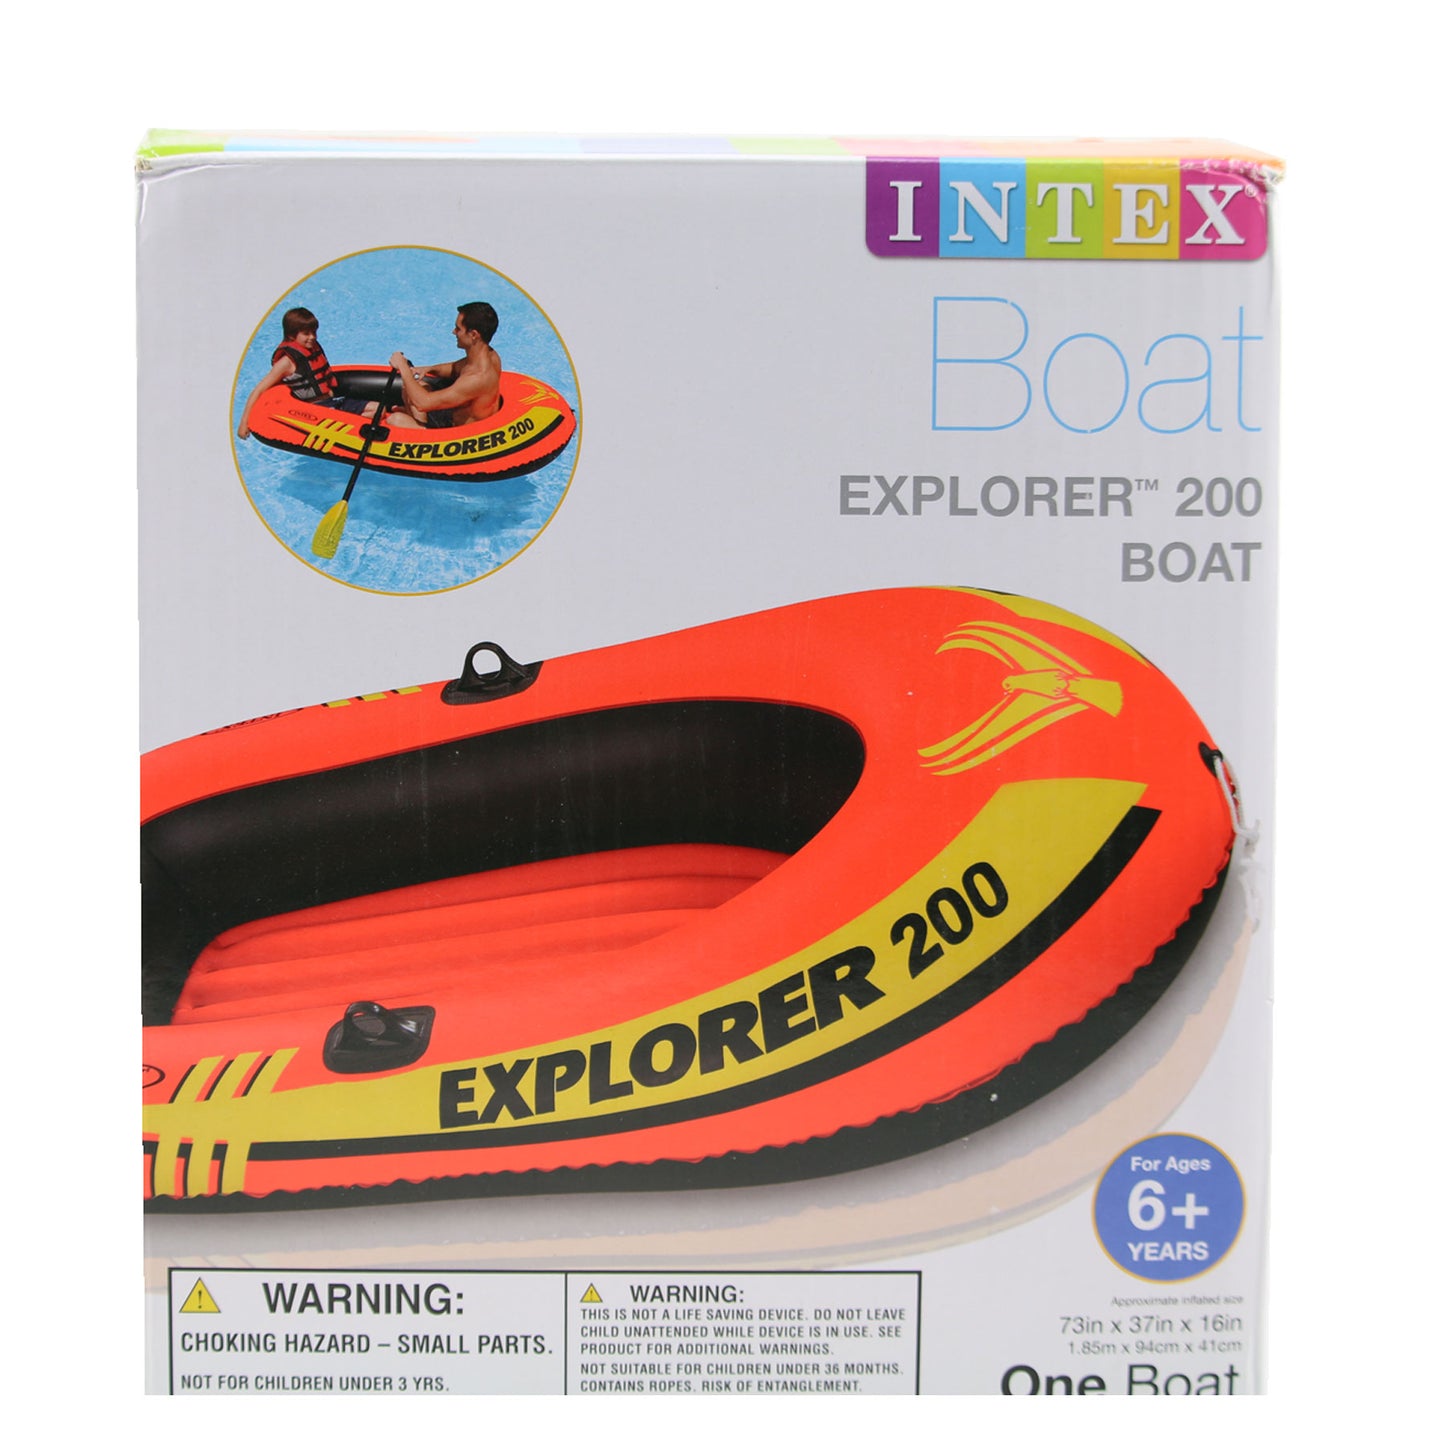 Intex Explorer 200 Boat, New Orange, Size: 2 Person, Intex